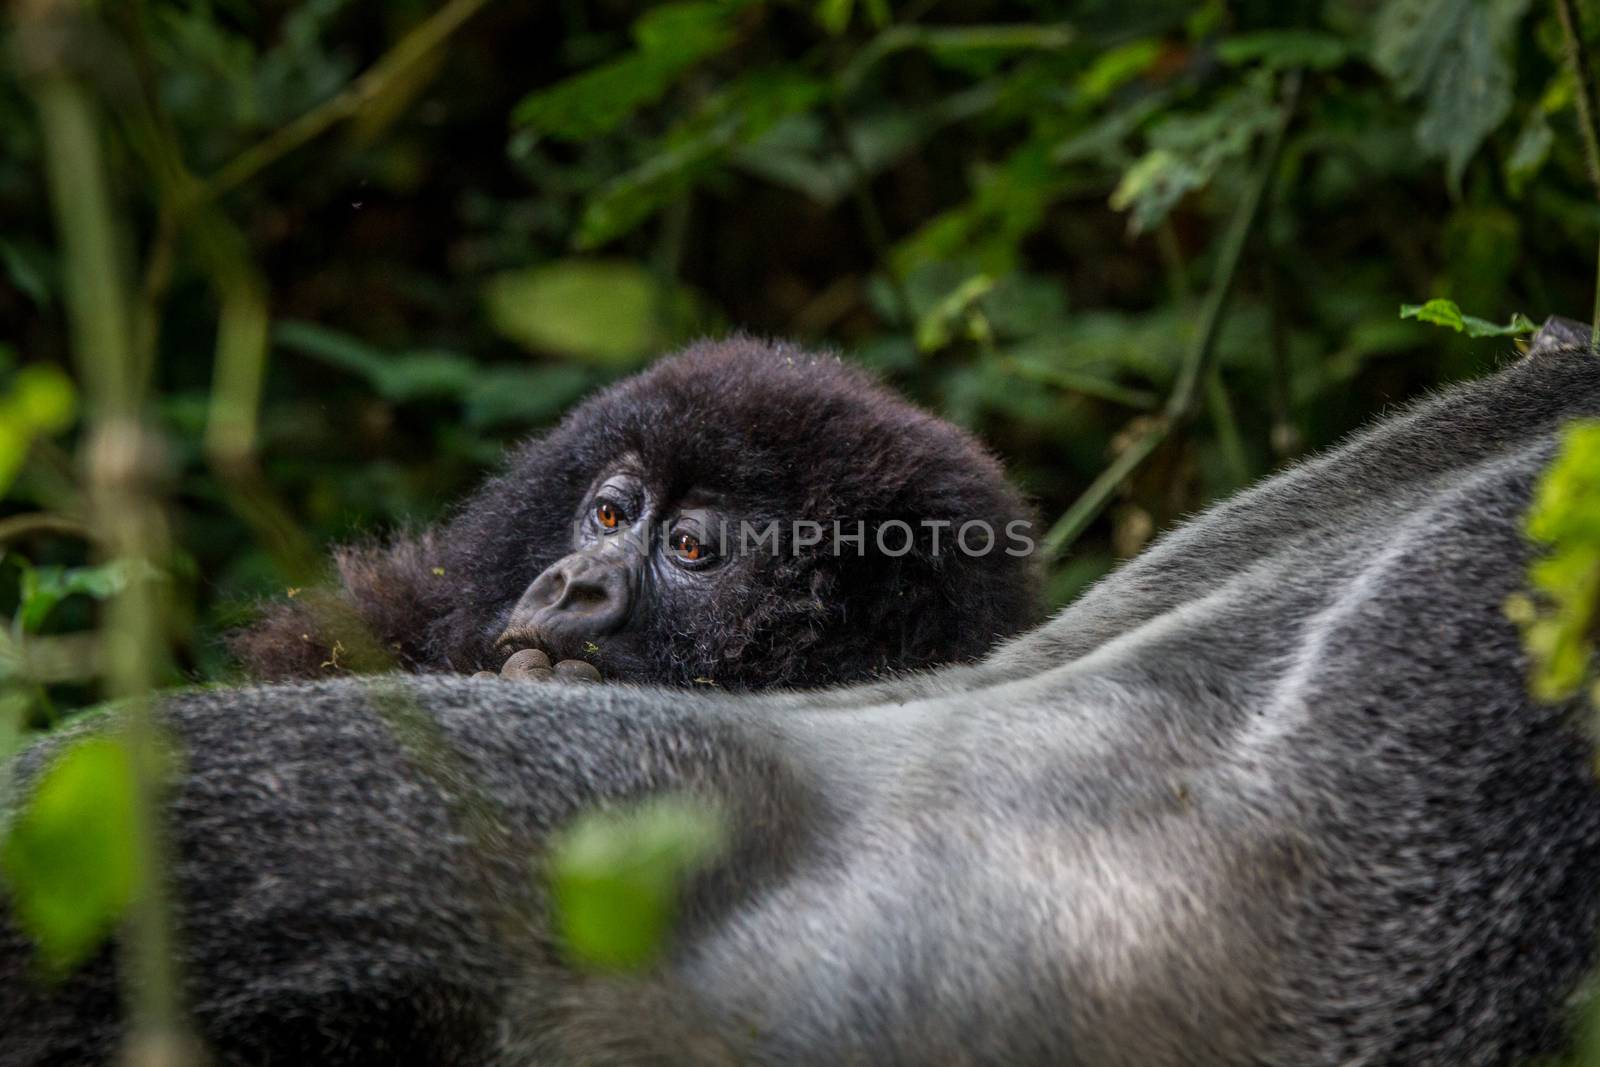 Close up of a baby Mountain gorilla in the Virunga National Park, Democratic Republic Of Congo.